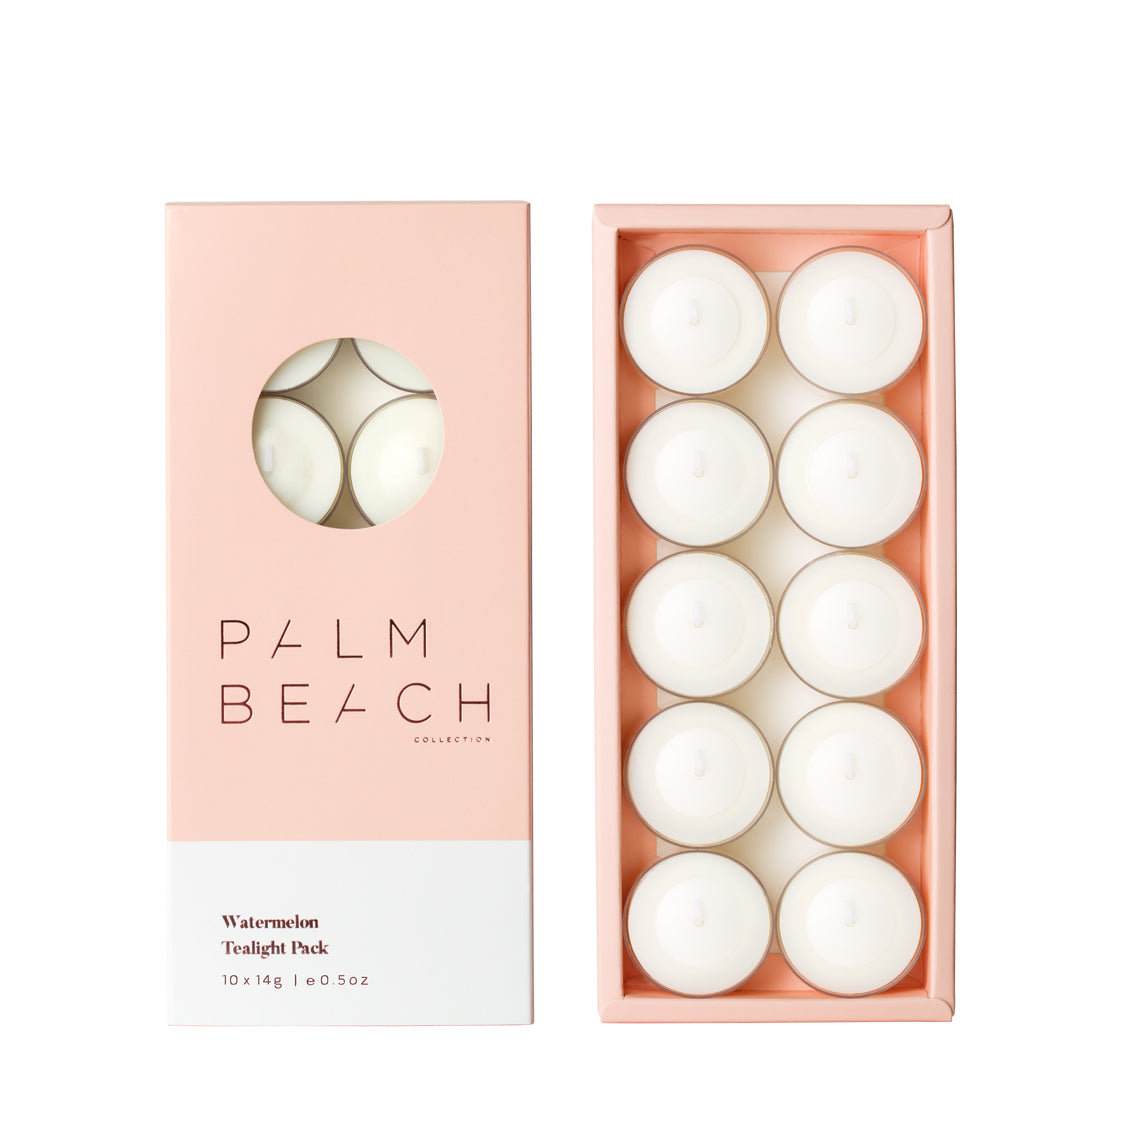 Palm Beach Collection Watermelon | Tealight Pack 10 x 14g